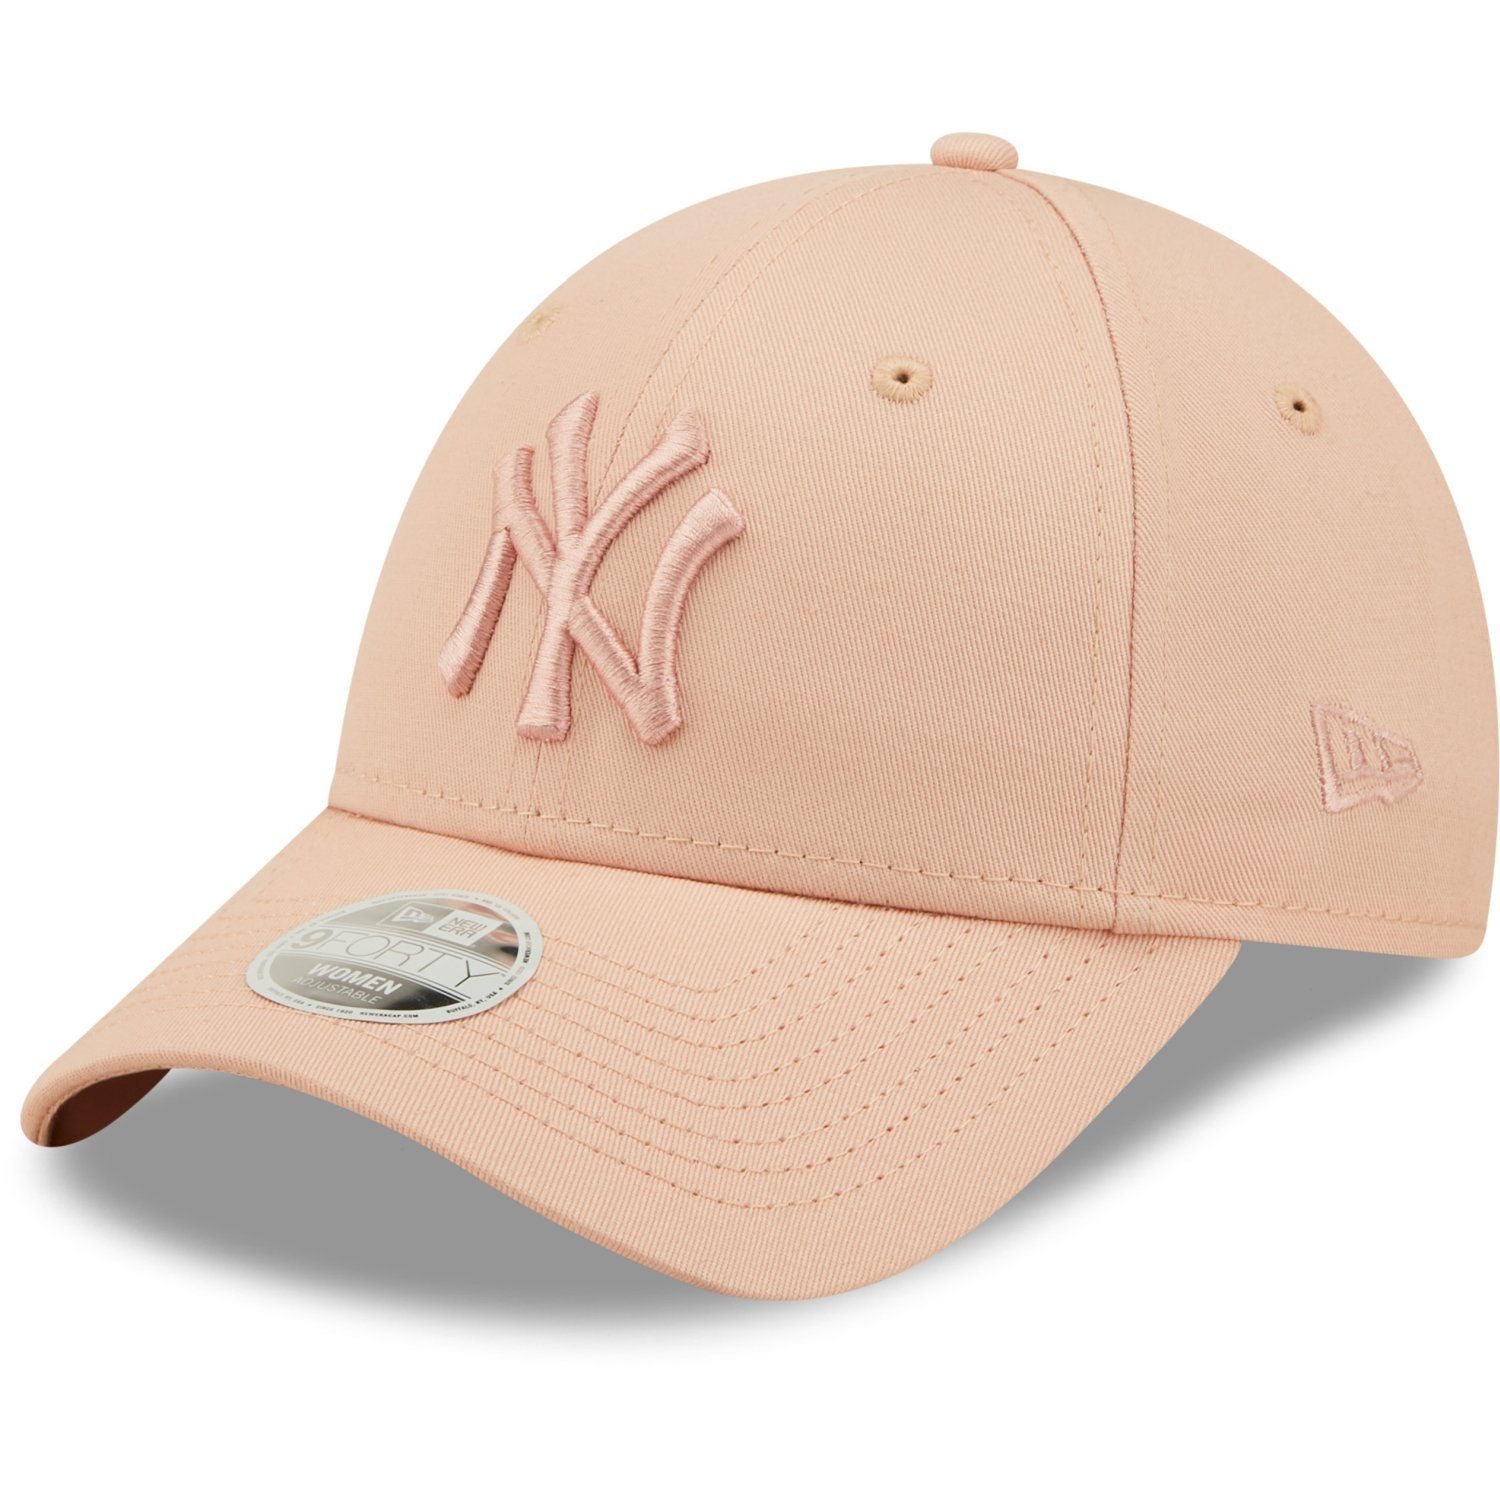 New New York Cap Baseball blush 9Forty Era Yankees